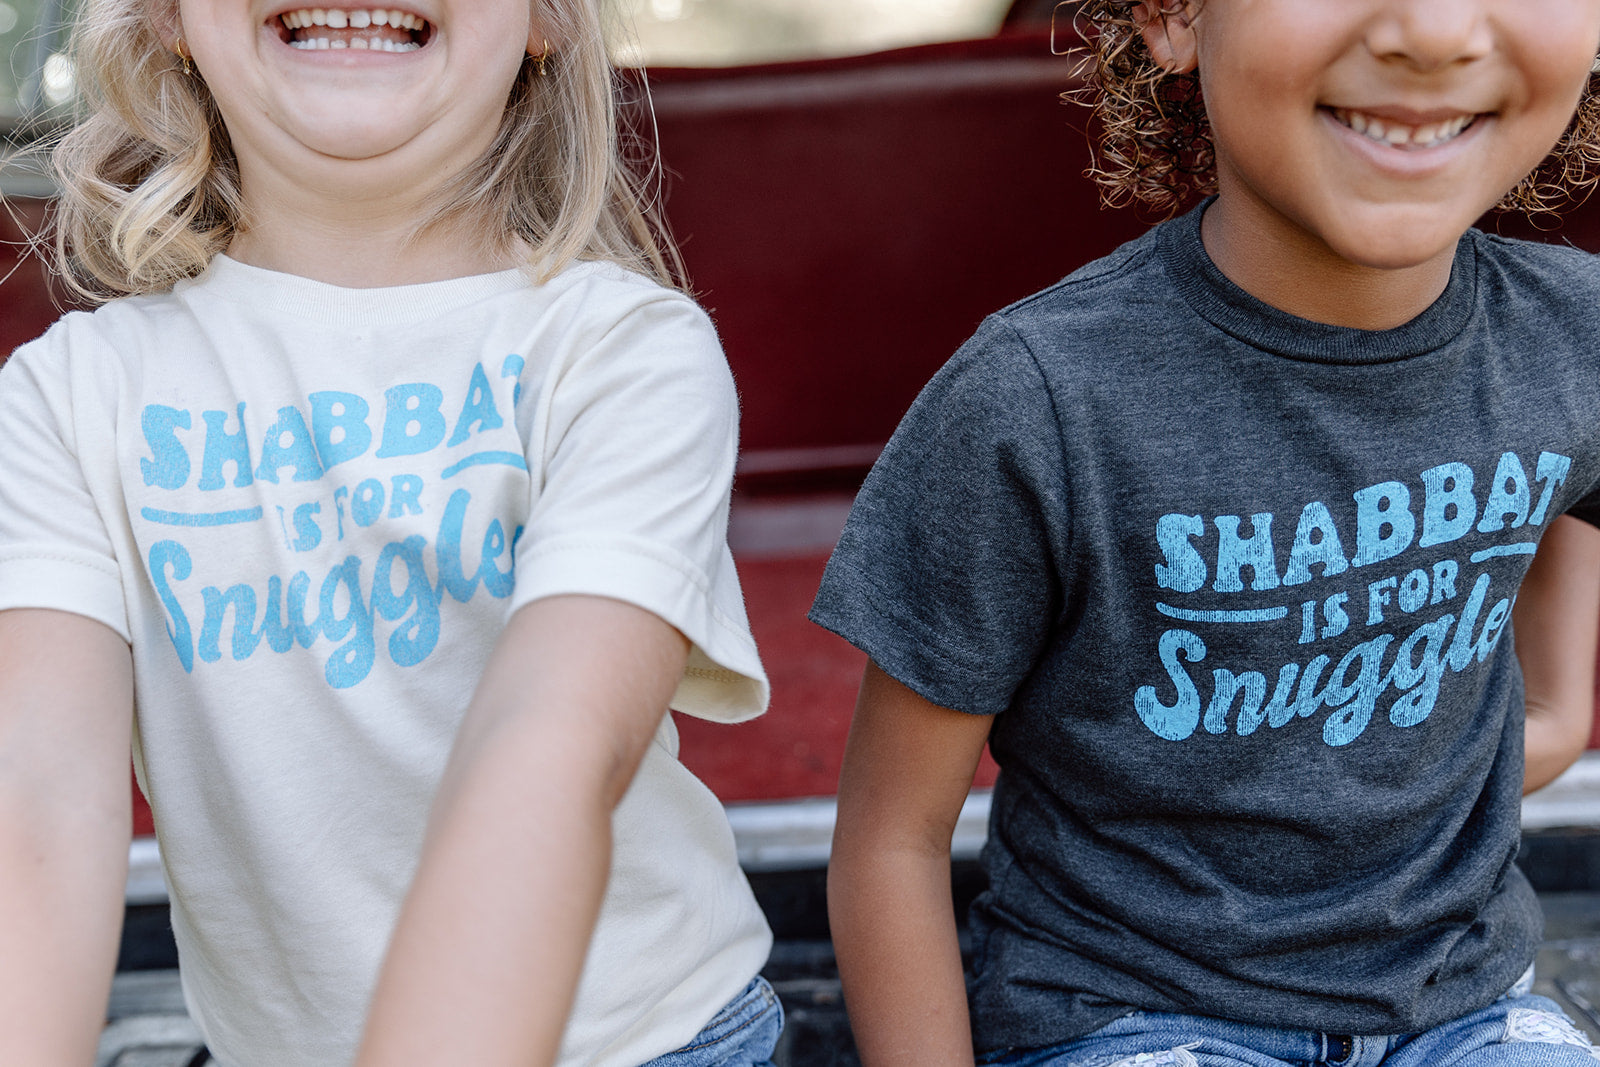 Shabbat Kids' Shirt